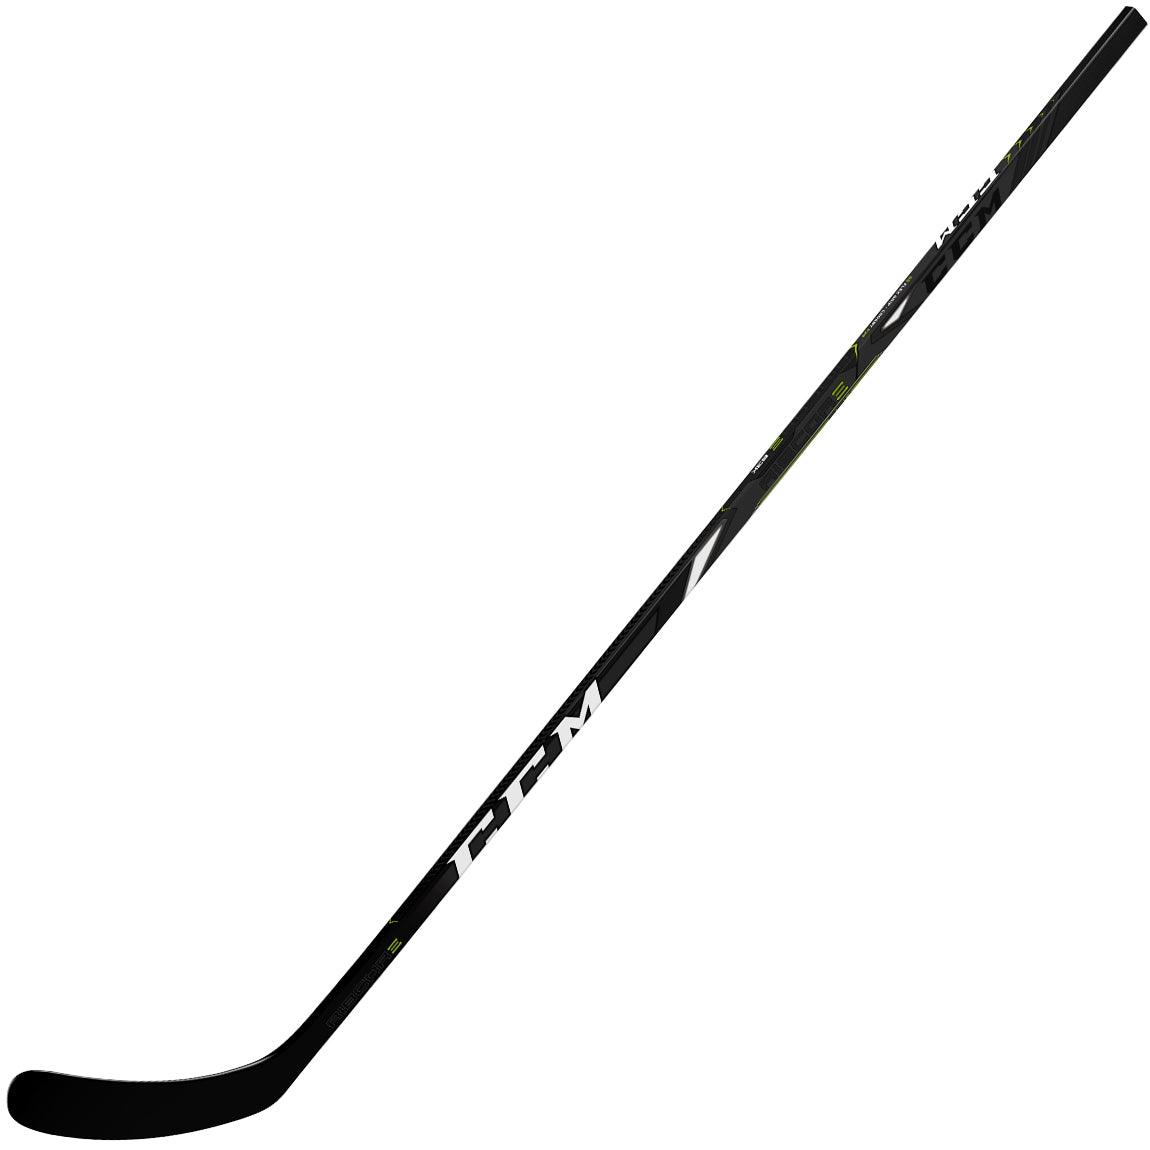 Ribcor 63K Hockey Stick - Intermediate - Sports Excellence